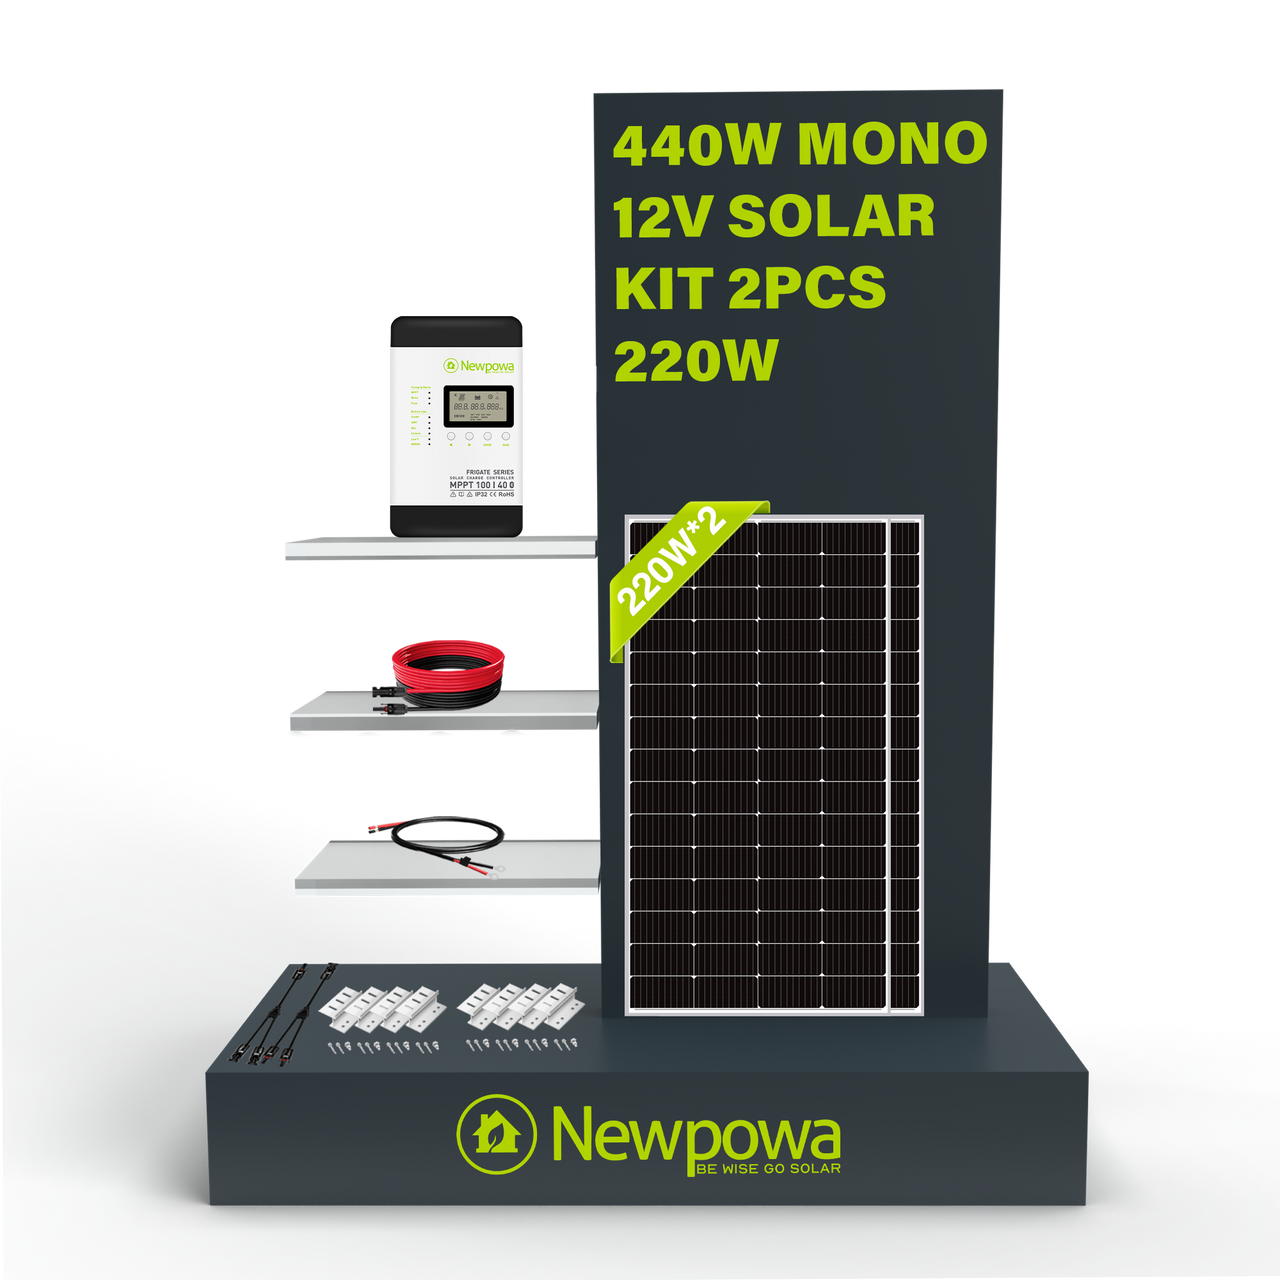 440W 12V Mono Solar Kit for Off-grid Solar Applications -Newpowa